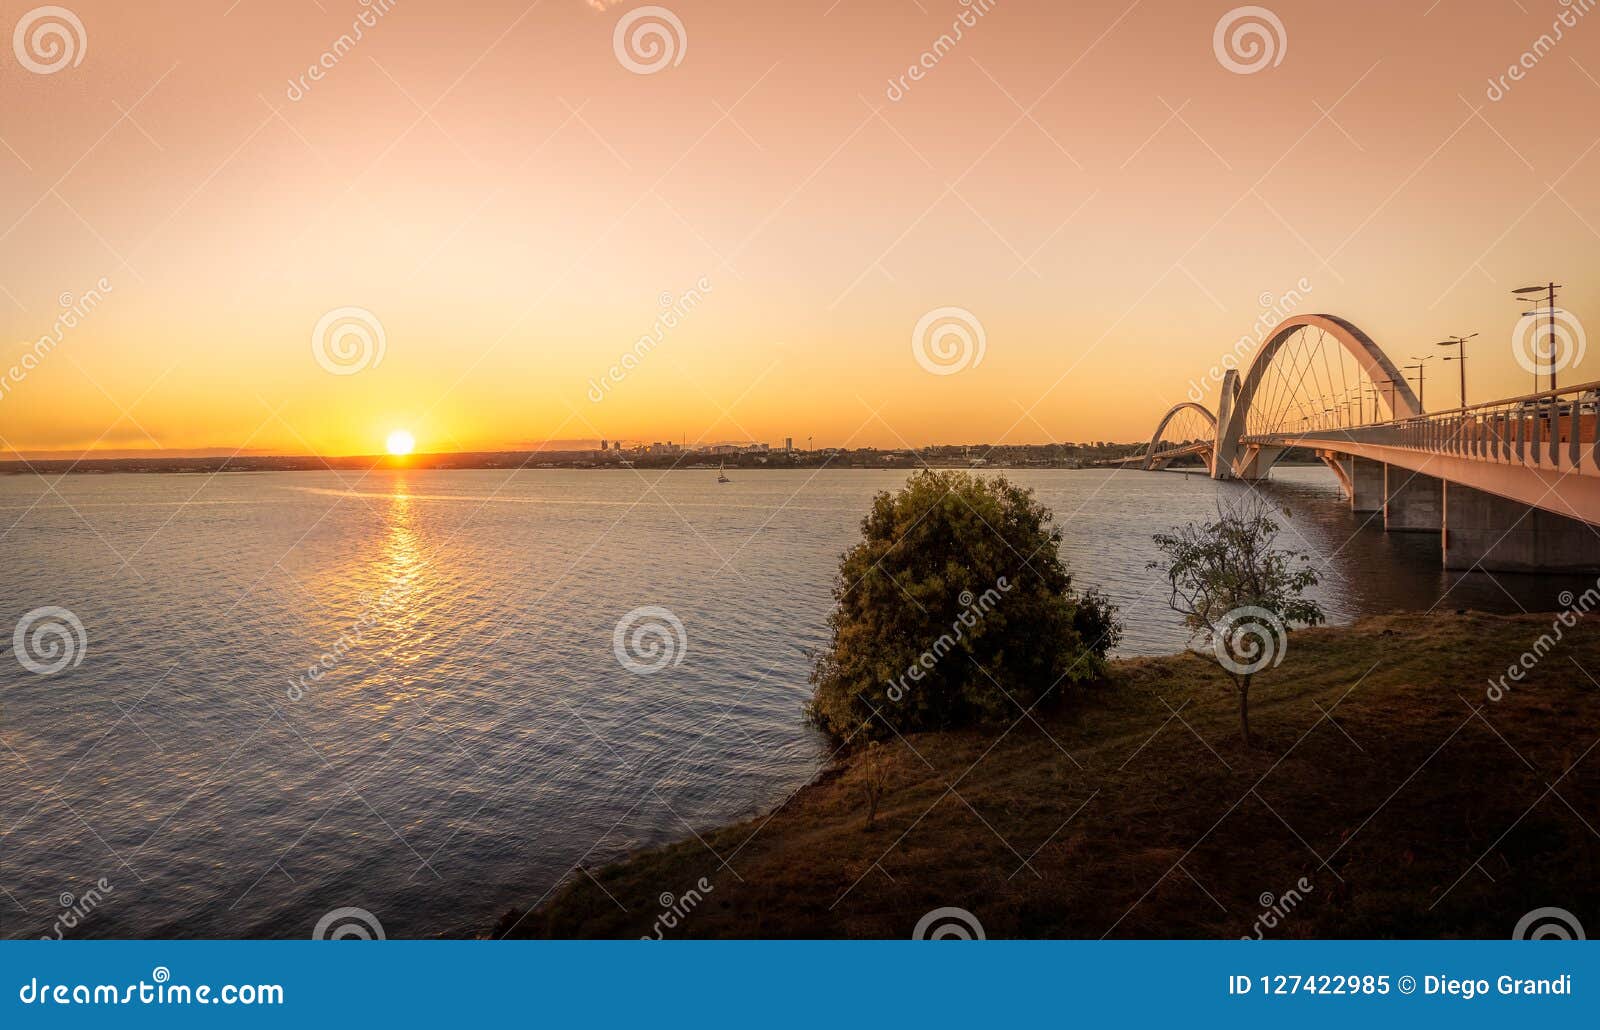 jk bridge and paranoa lake at sunset - brasilia, distrito federal, brazil